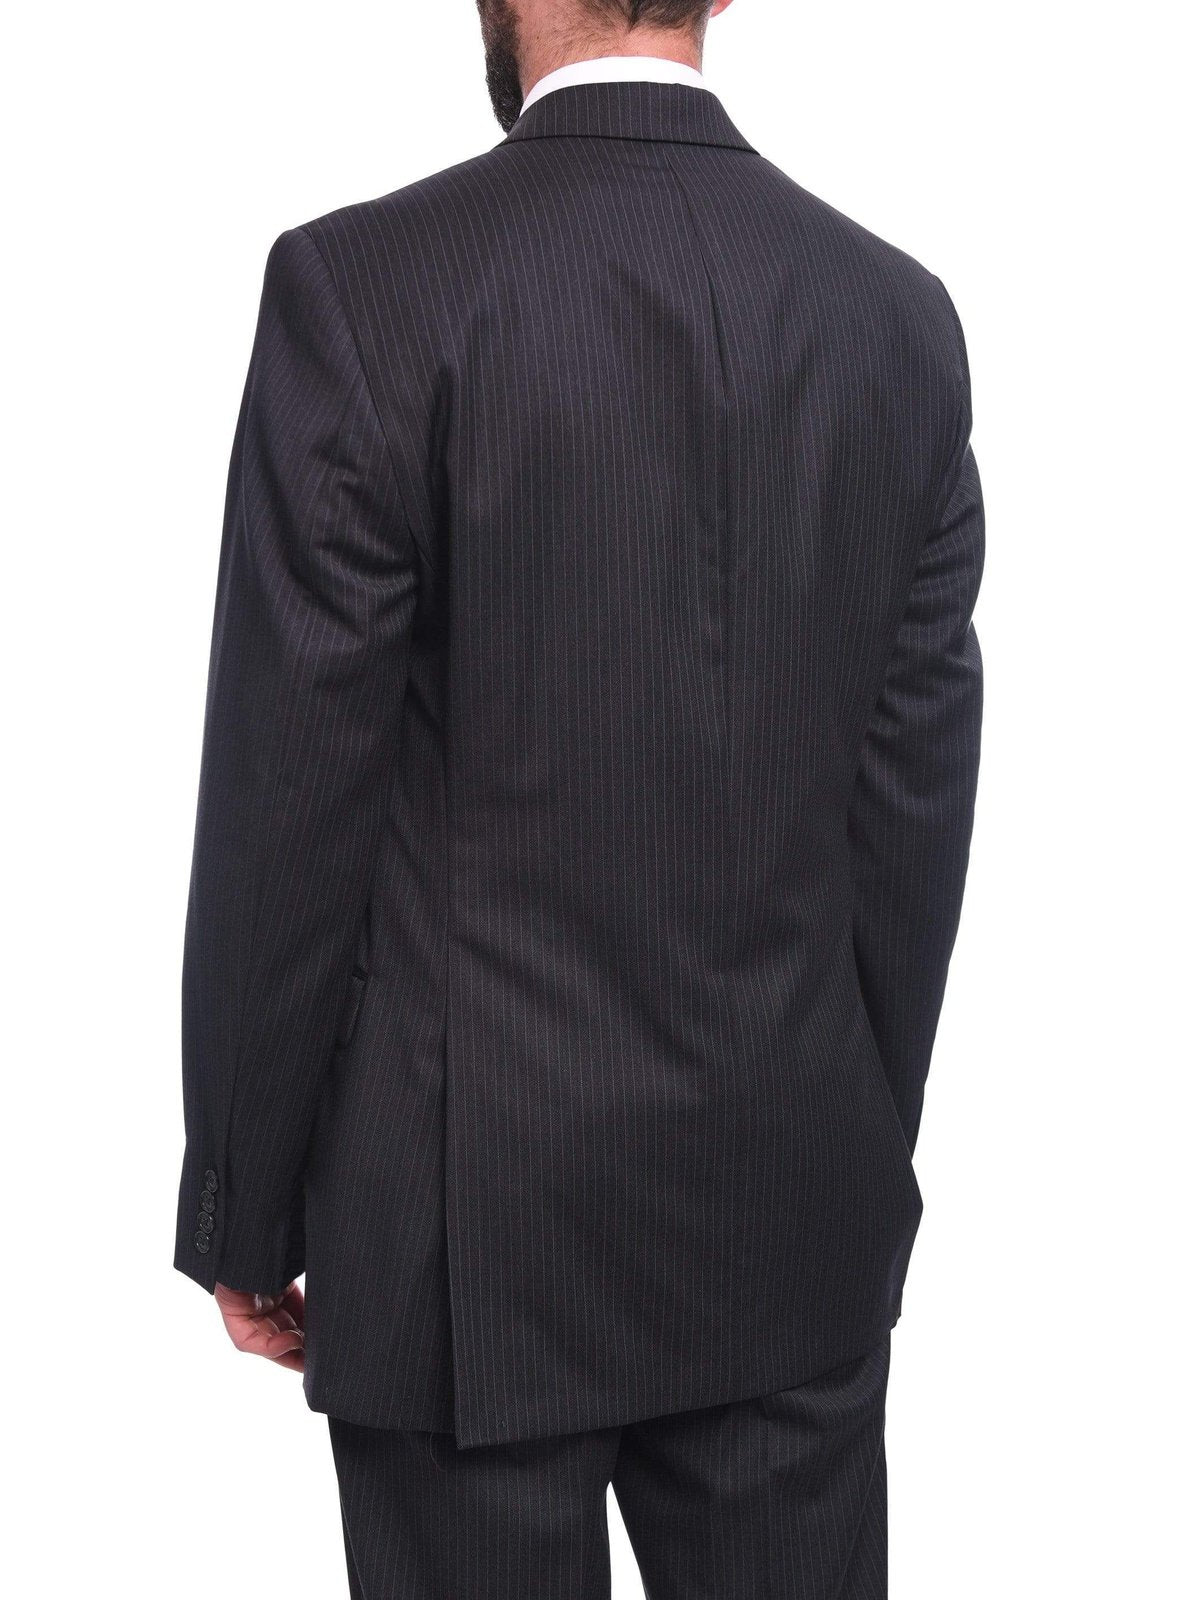 Bruno Piattelli Bruno Piattelli Classic Fit Charcoal Gray Pinstriped Two Button Wool Suit